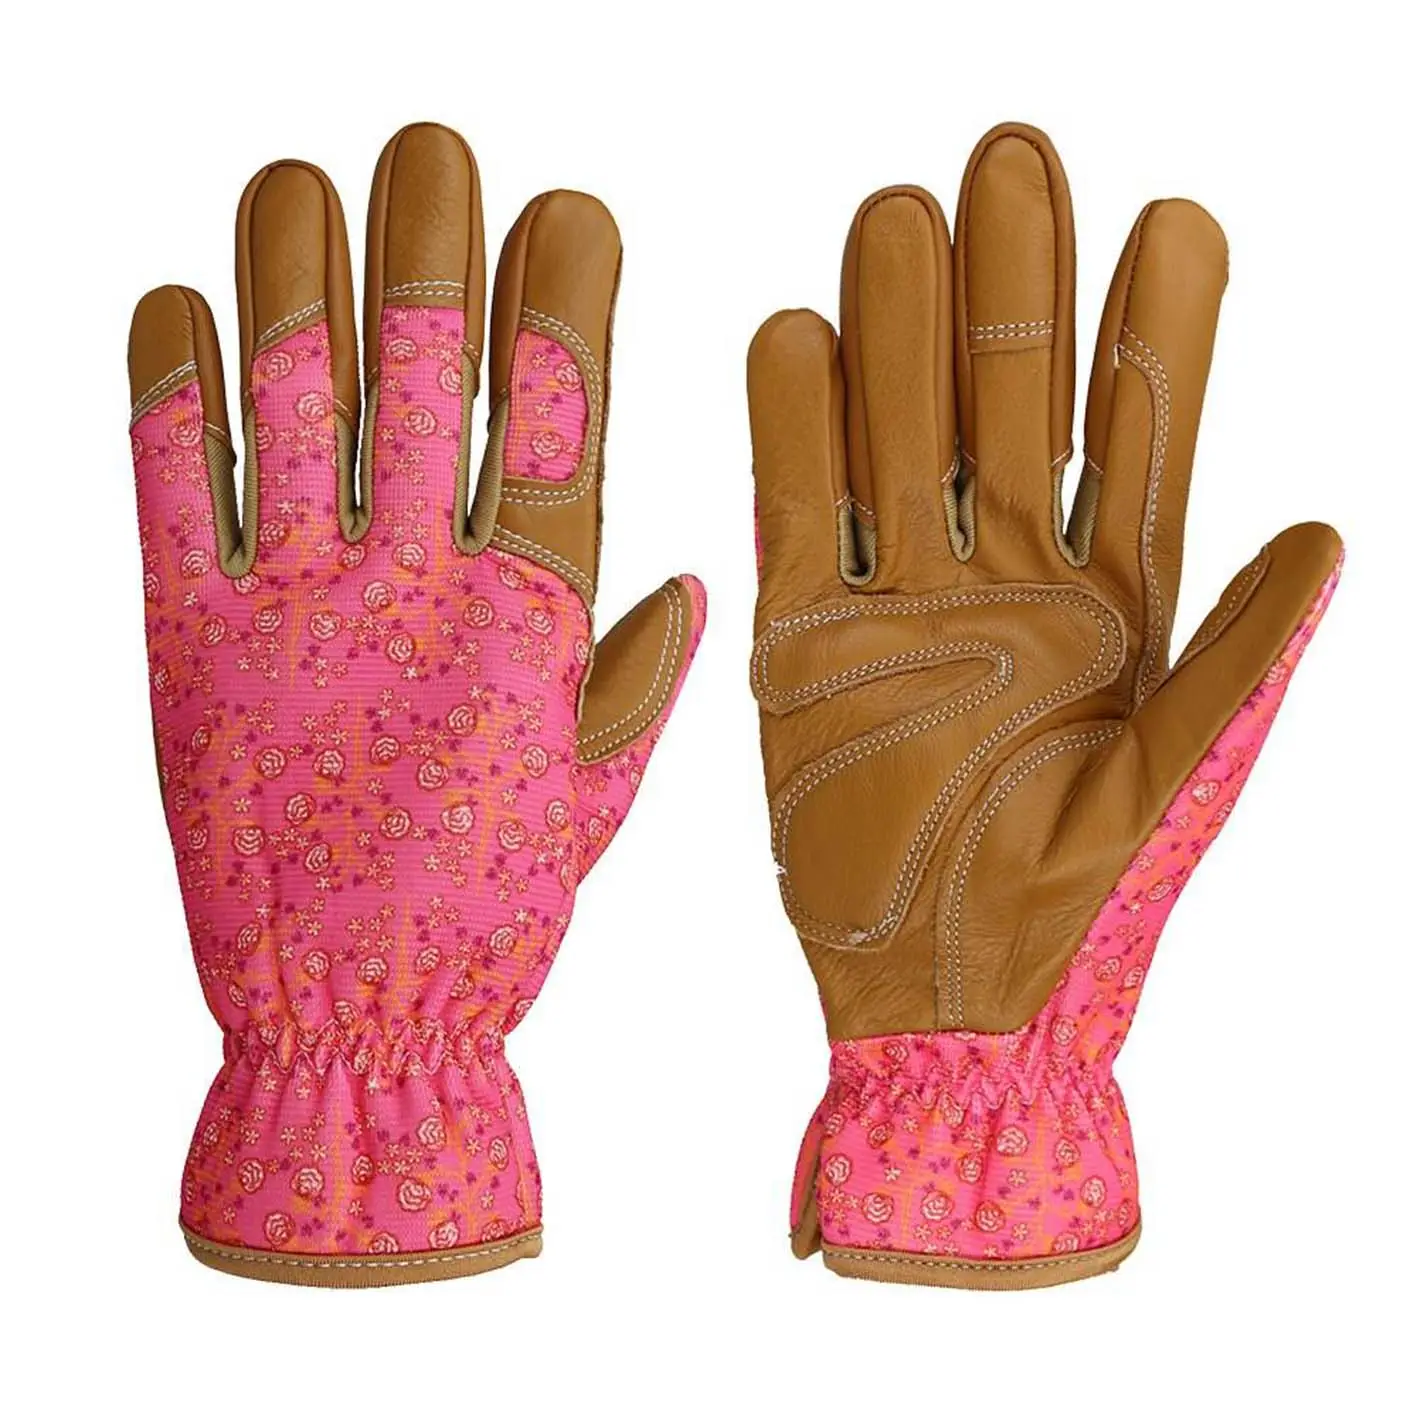 Wholesales Latest Design Leather Garden's Gloves Custom Design Gardening Gloves For Hand Protection